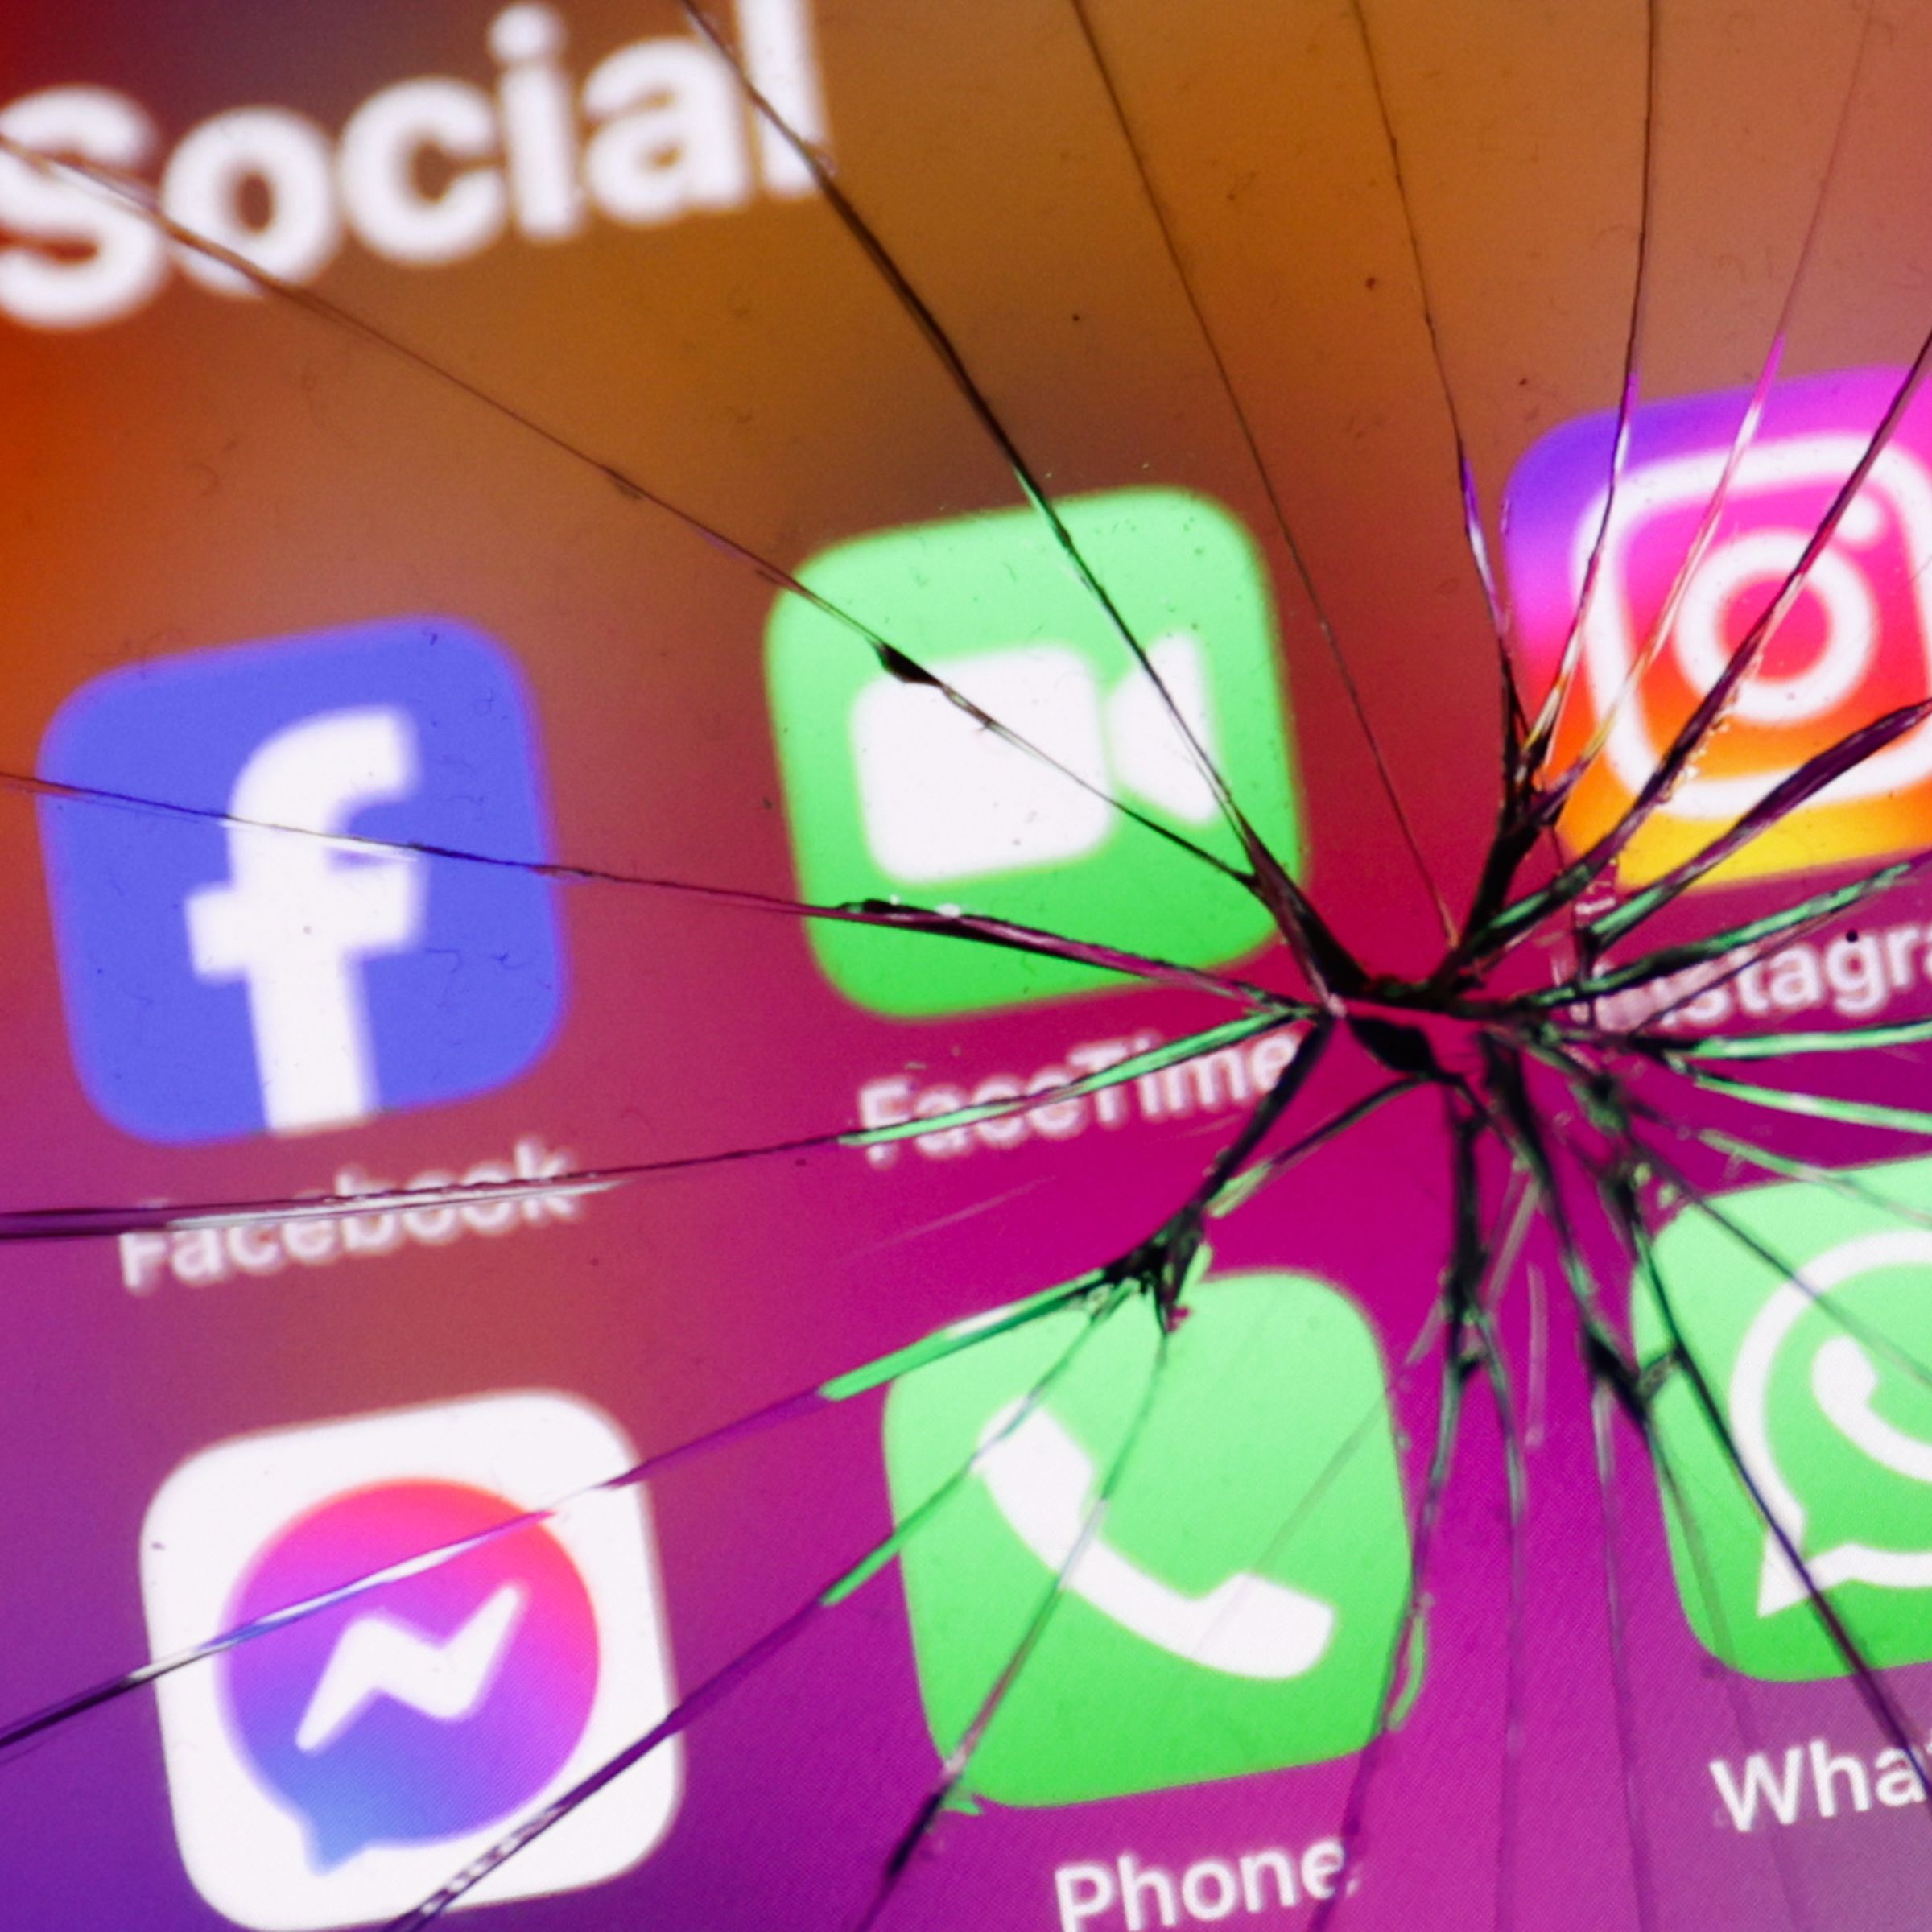 Social Media Apps Through The Broken Glass